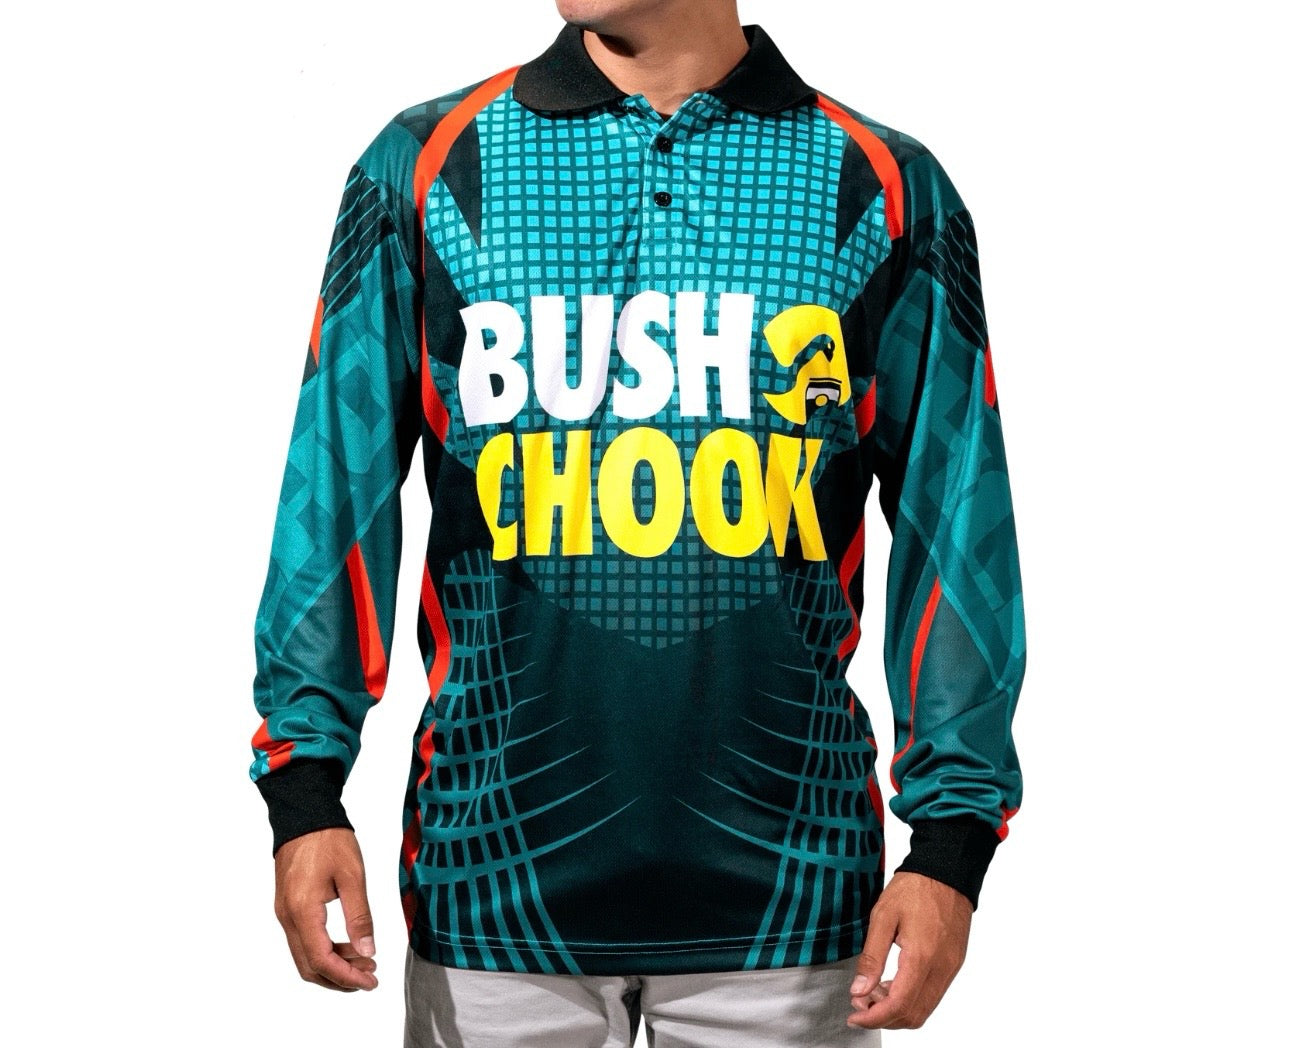 Bushchook fishing jersey - mens